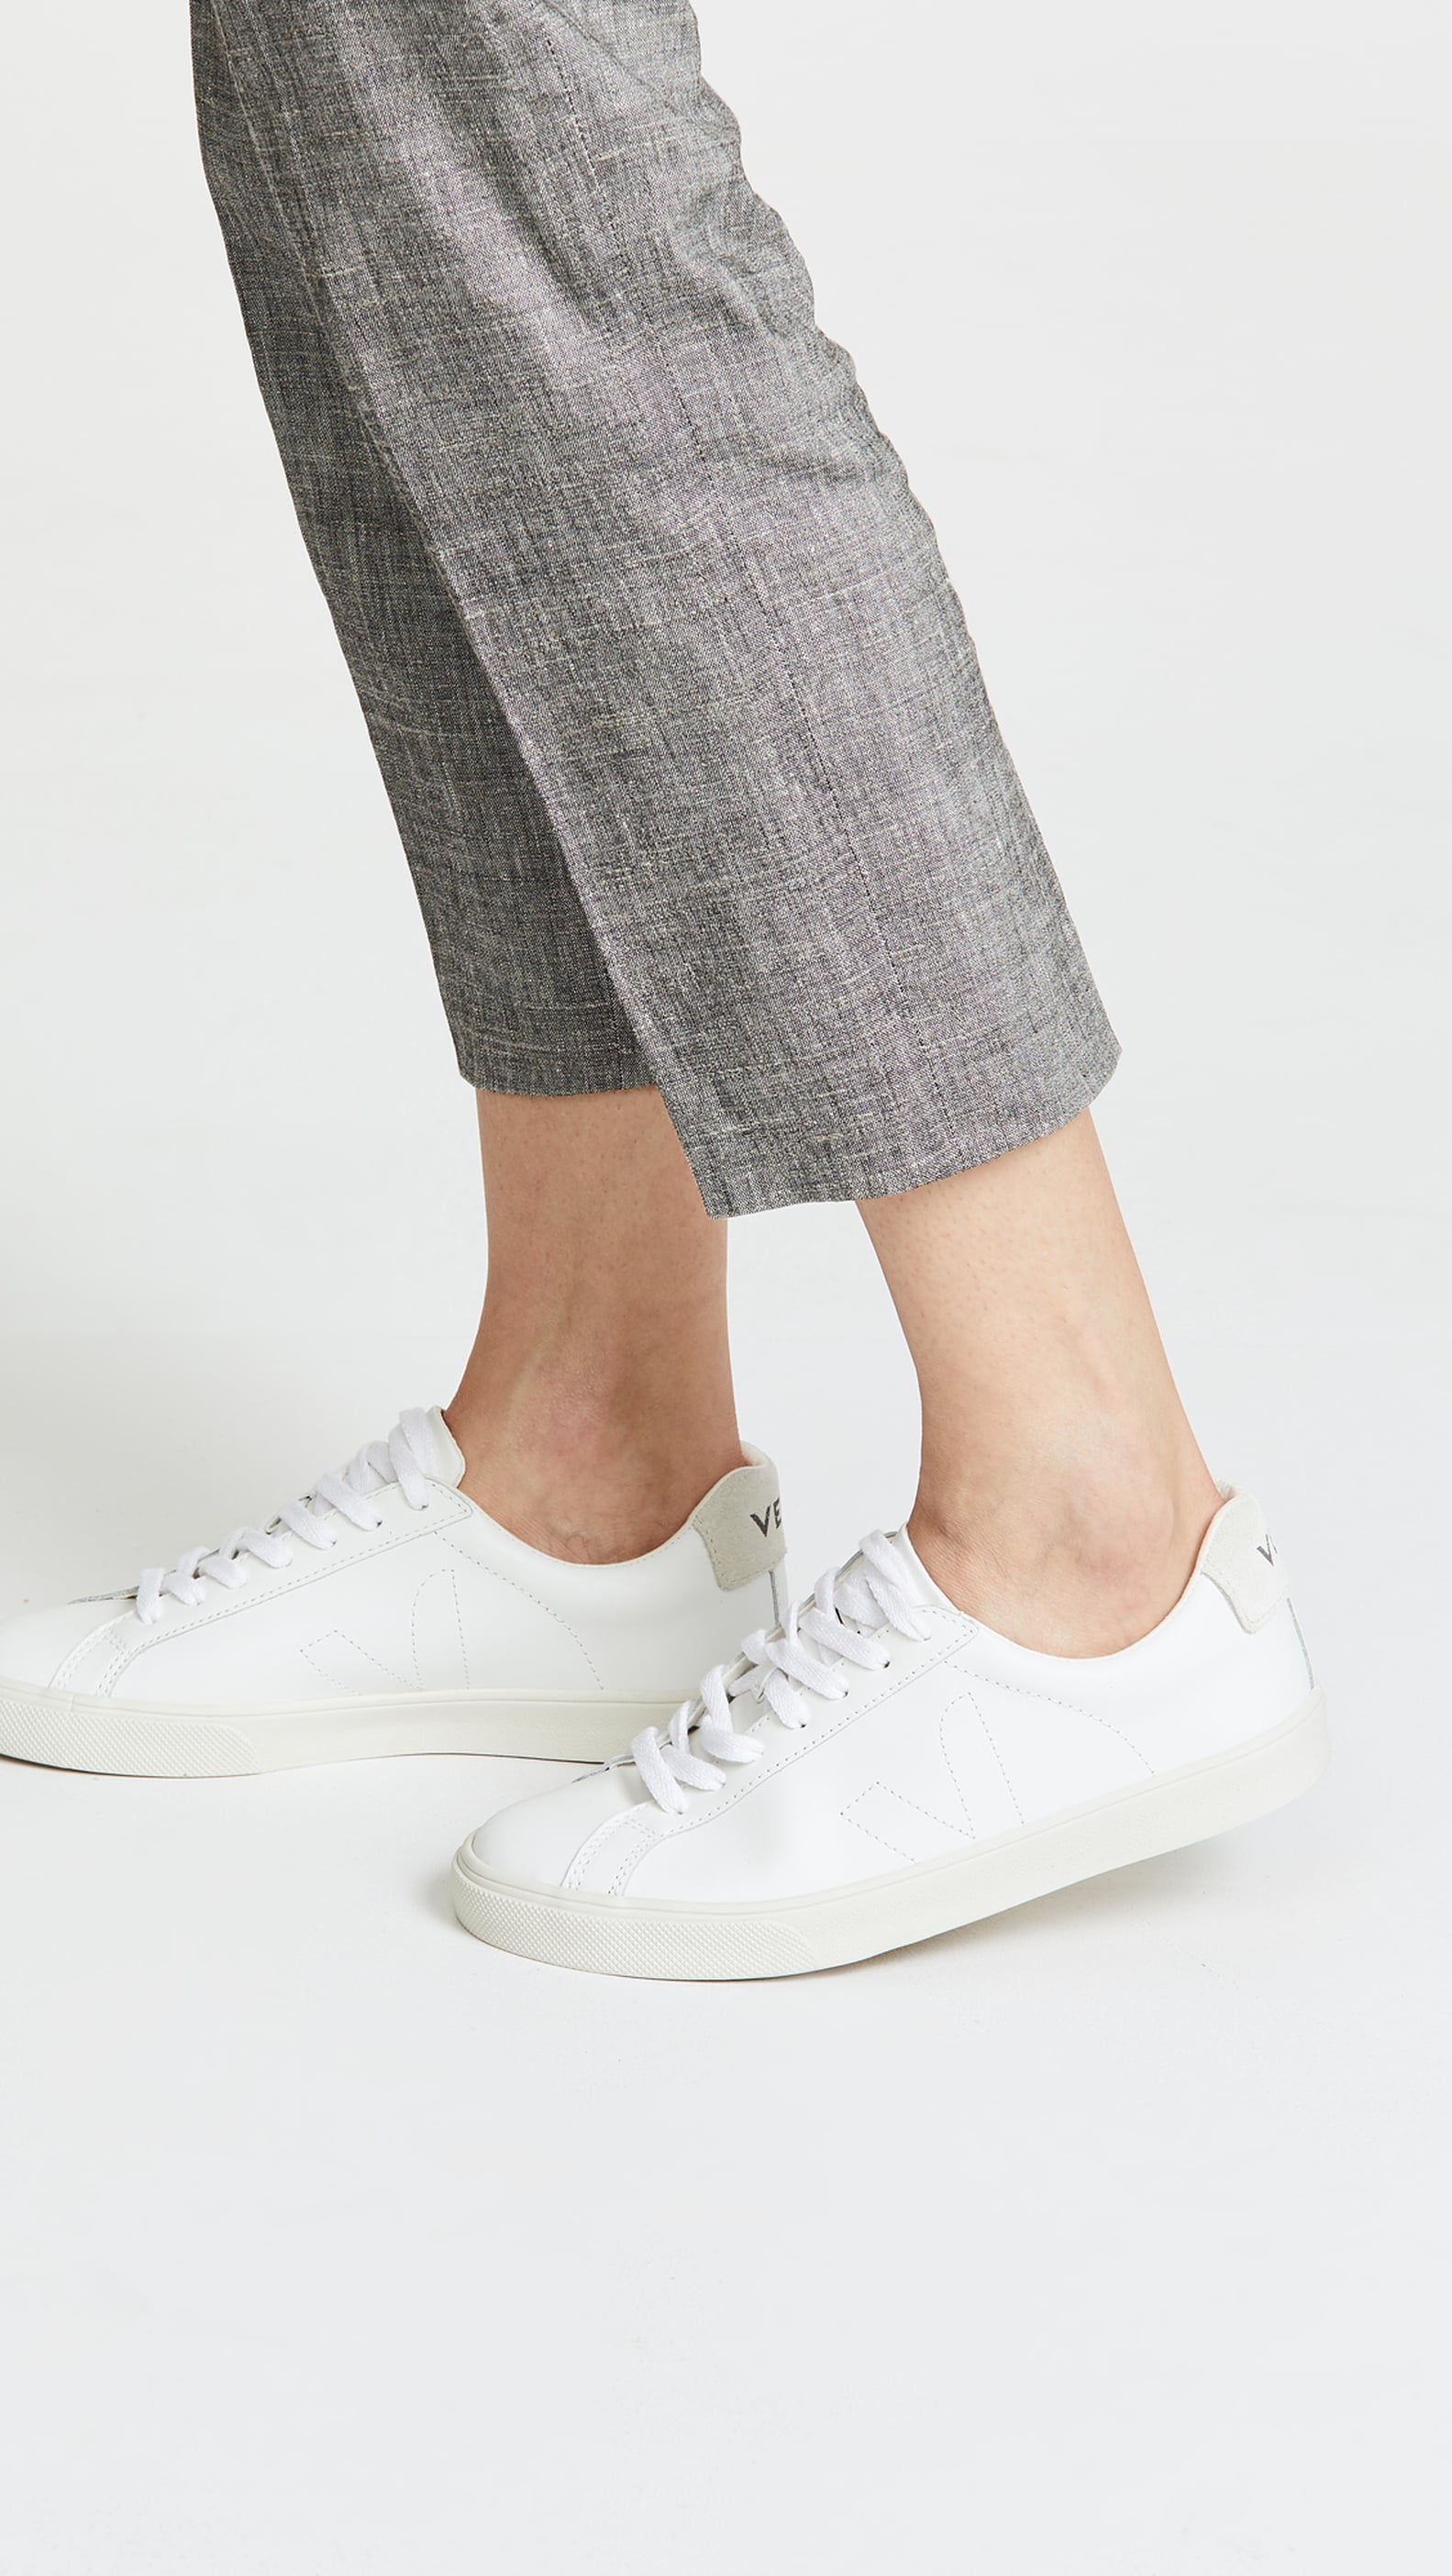 Jennifer Aniston's White Sneakers | POPSUGAR Fashion